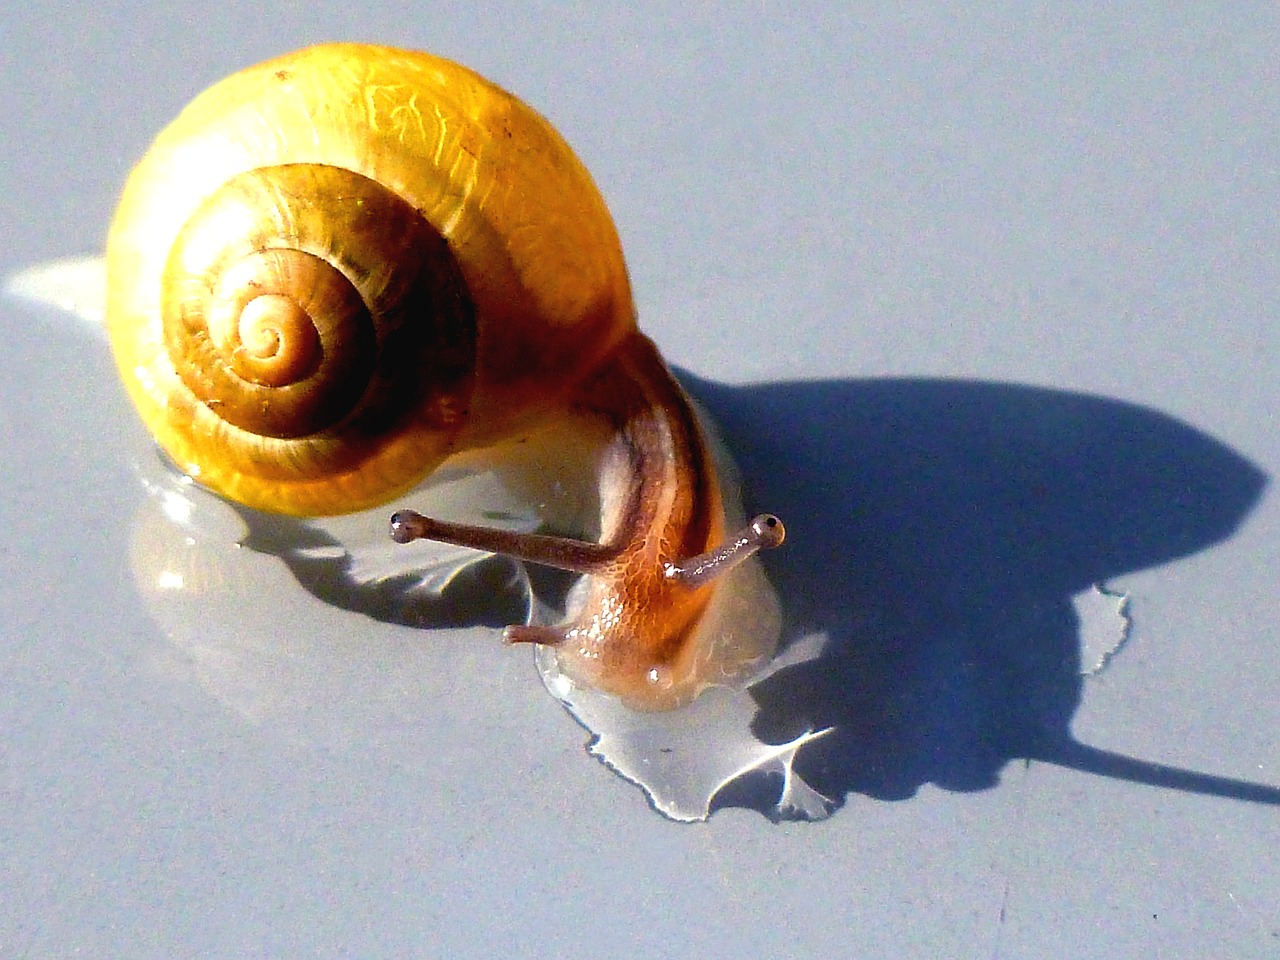 snail shell probe free photo